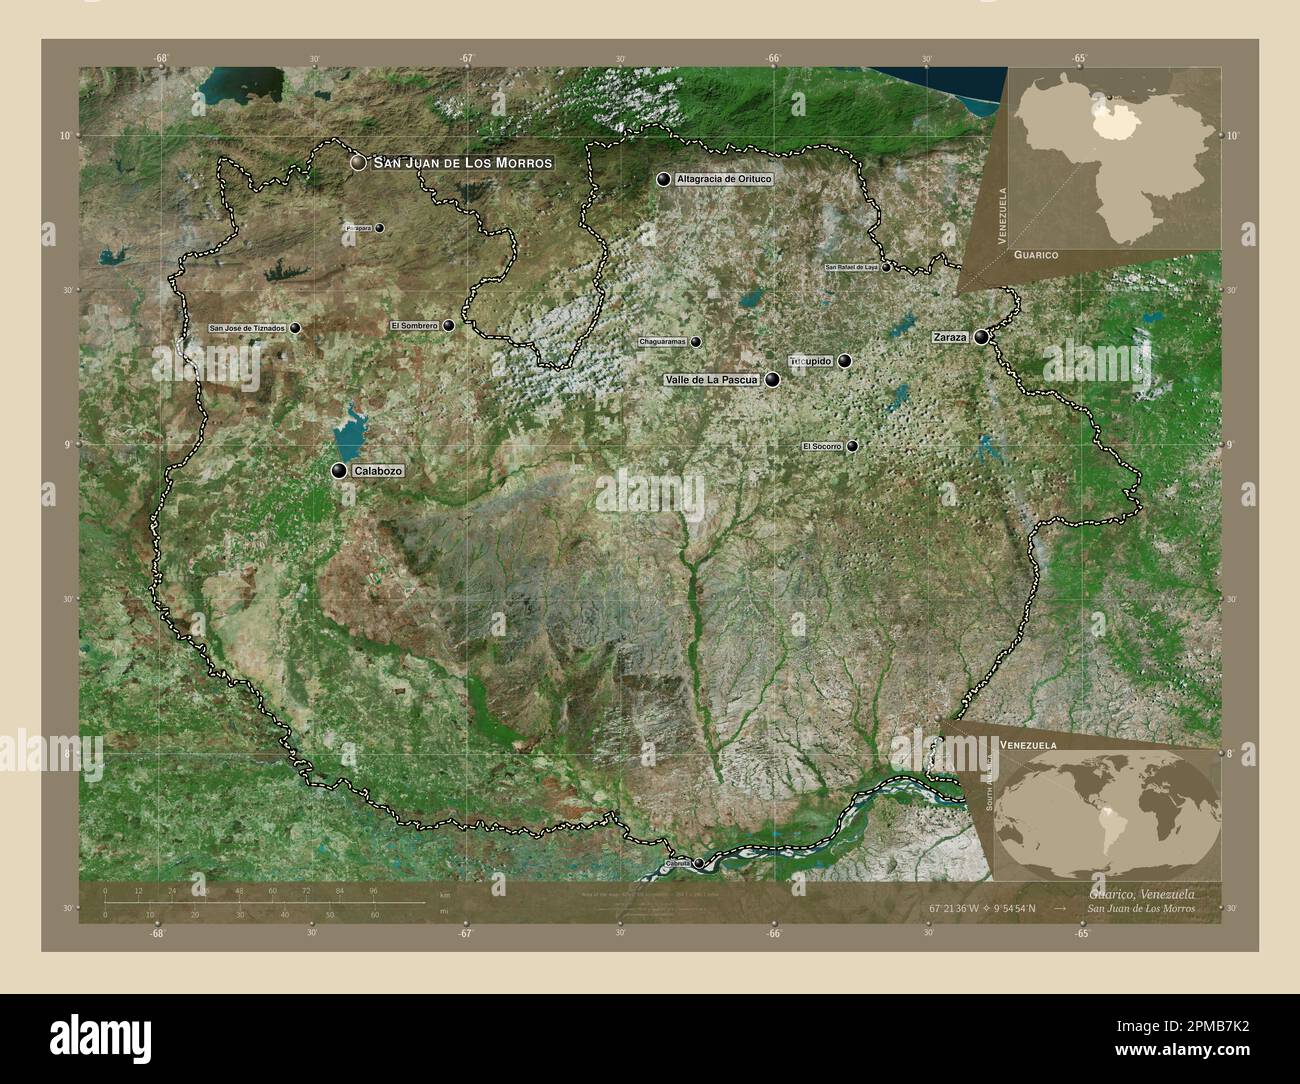 Guarico State Of Venezuela High Resolution Satellite Map Locations